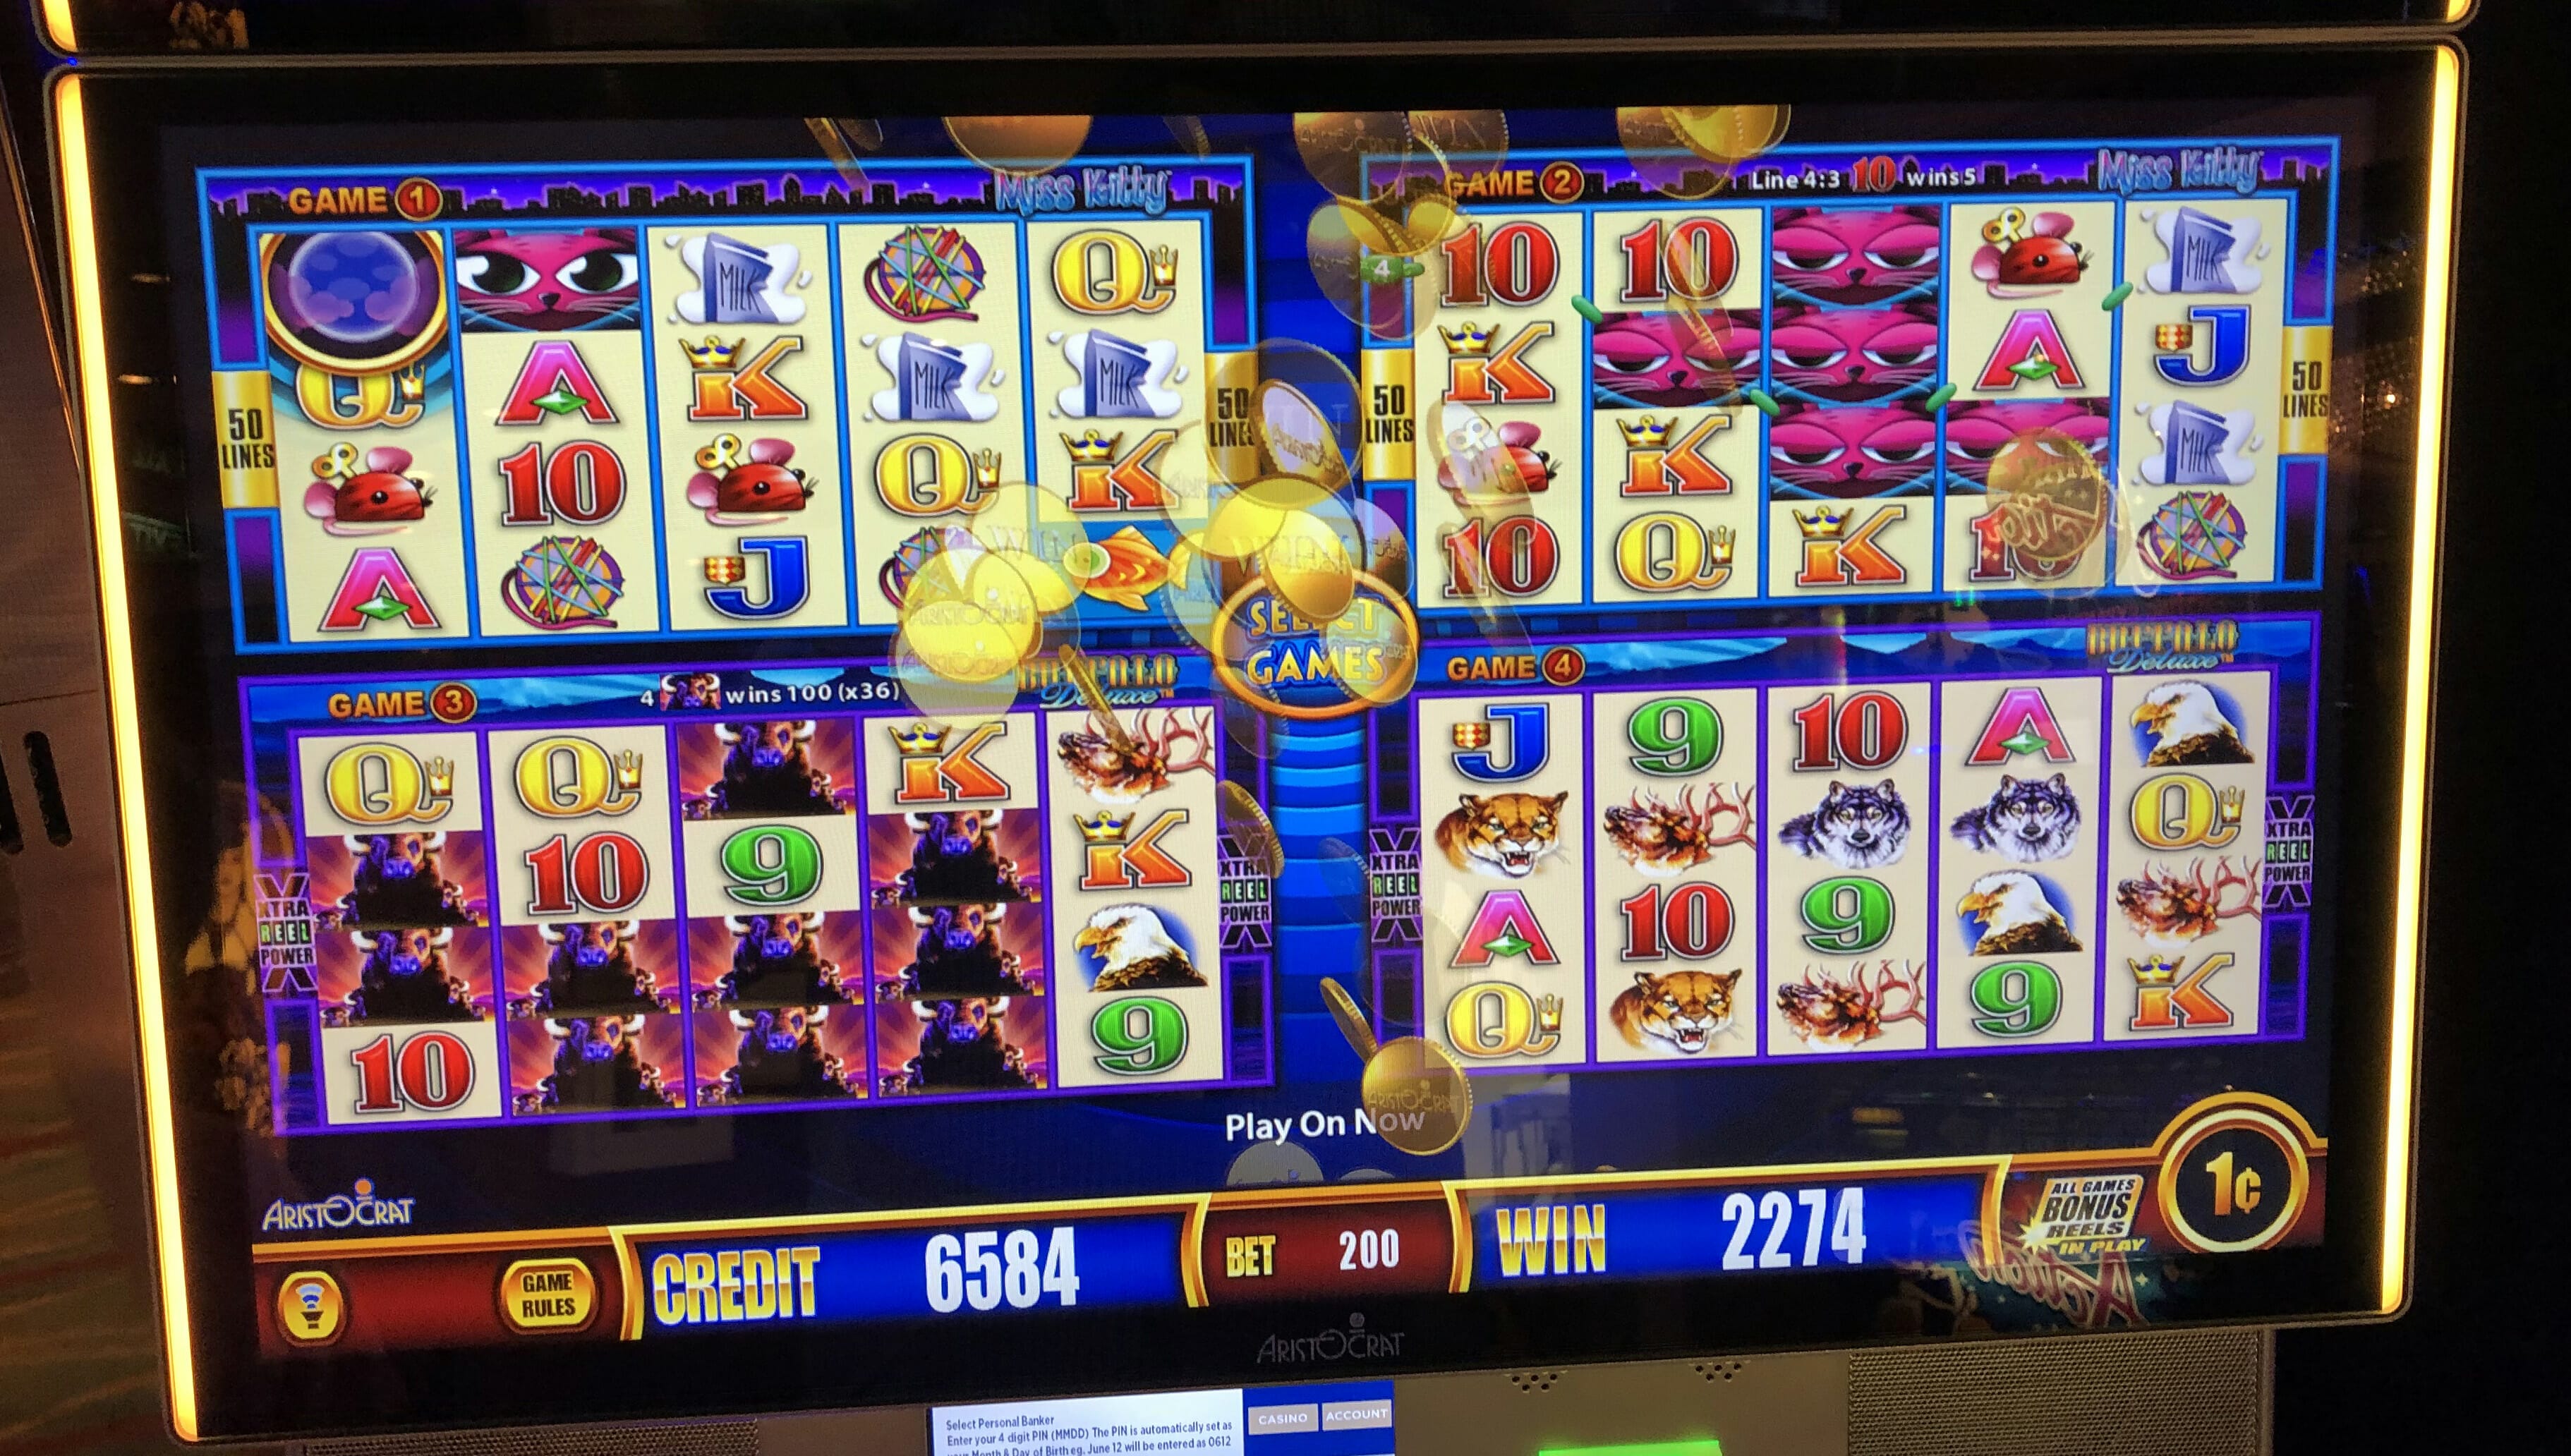 Finlandia Casino: Games, Tips, Bonuses, Review Slot Machine